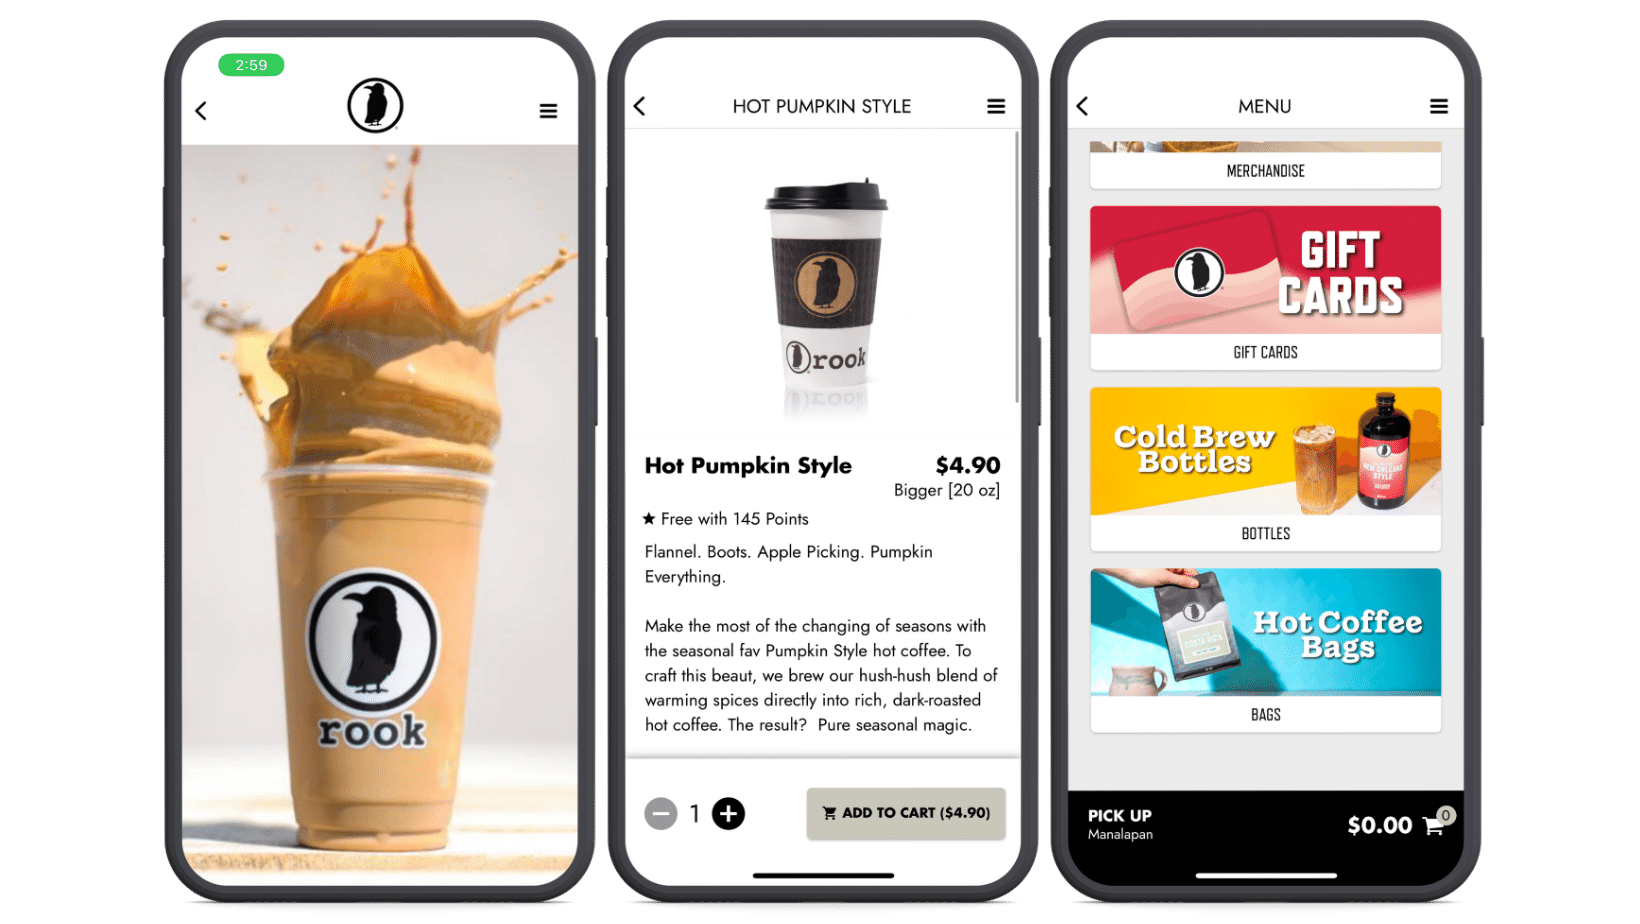 Rook Coffee's App